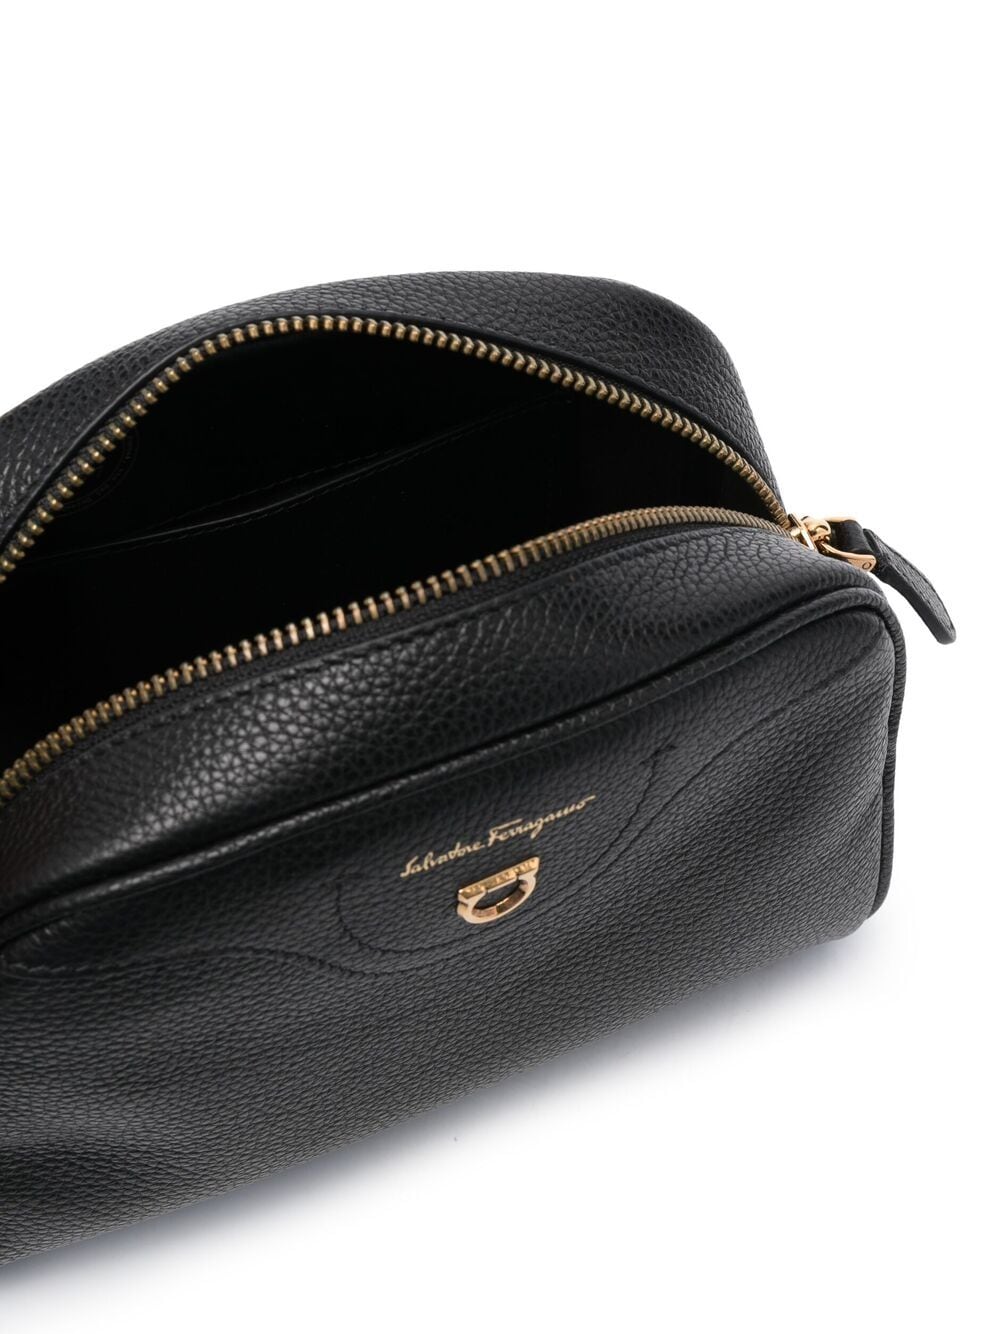 Salvatore Ferragamo Travel Leather Camera Crossbody Bag In Black | ModeSens